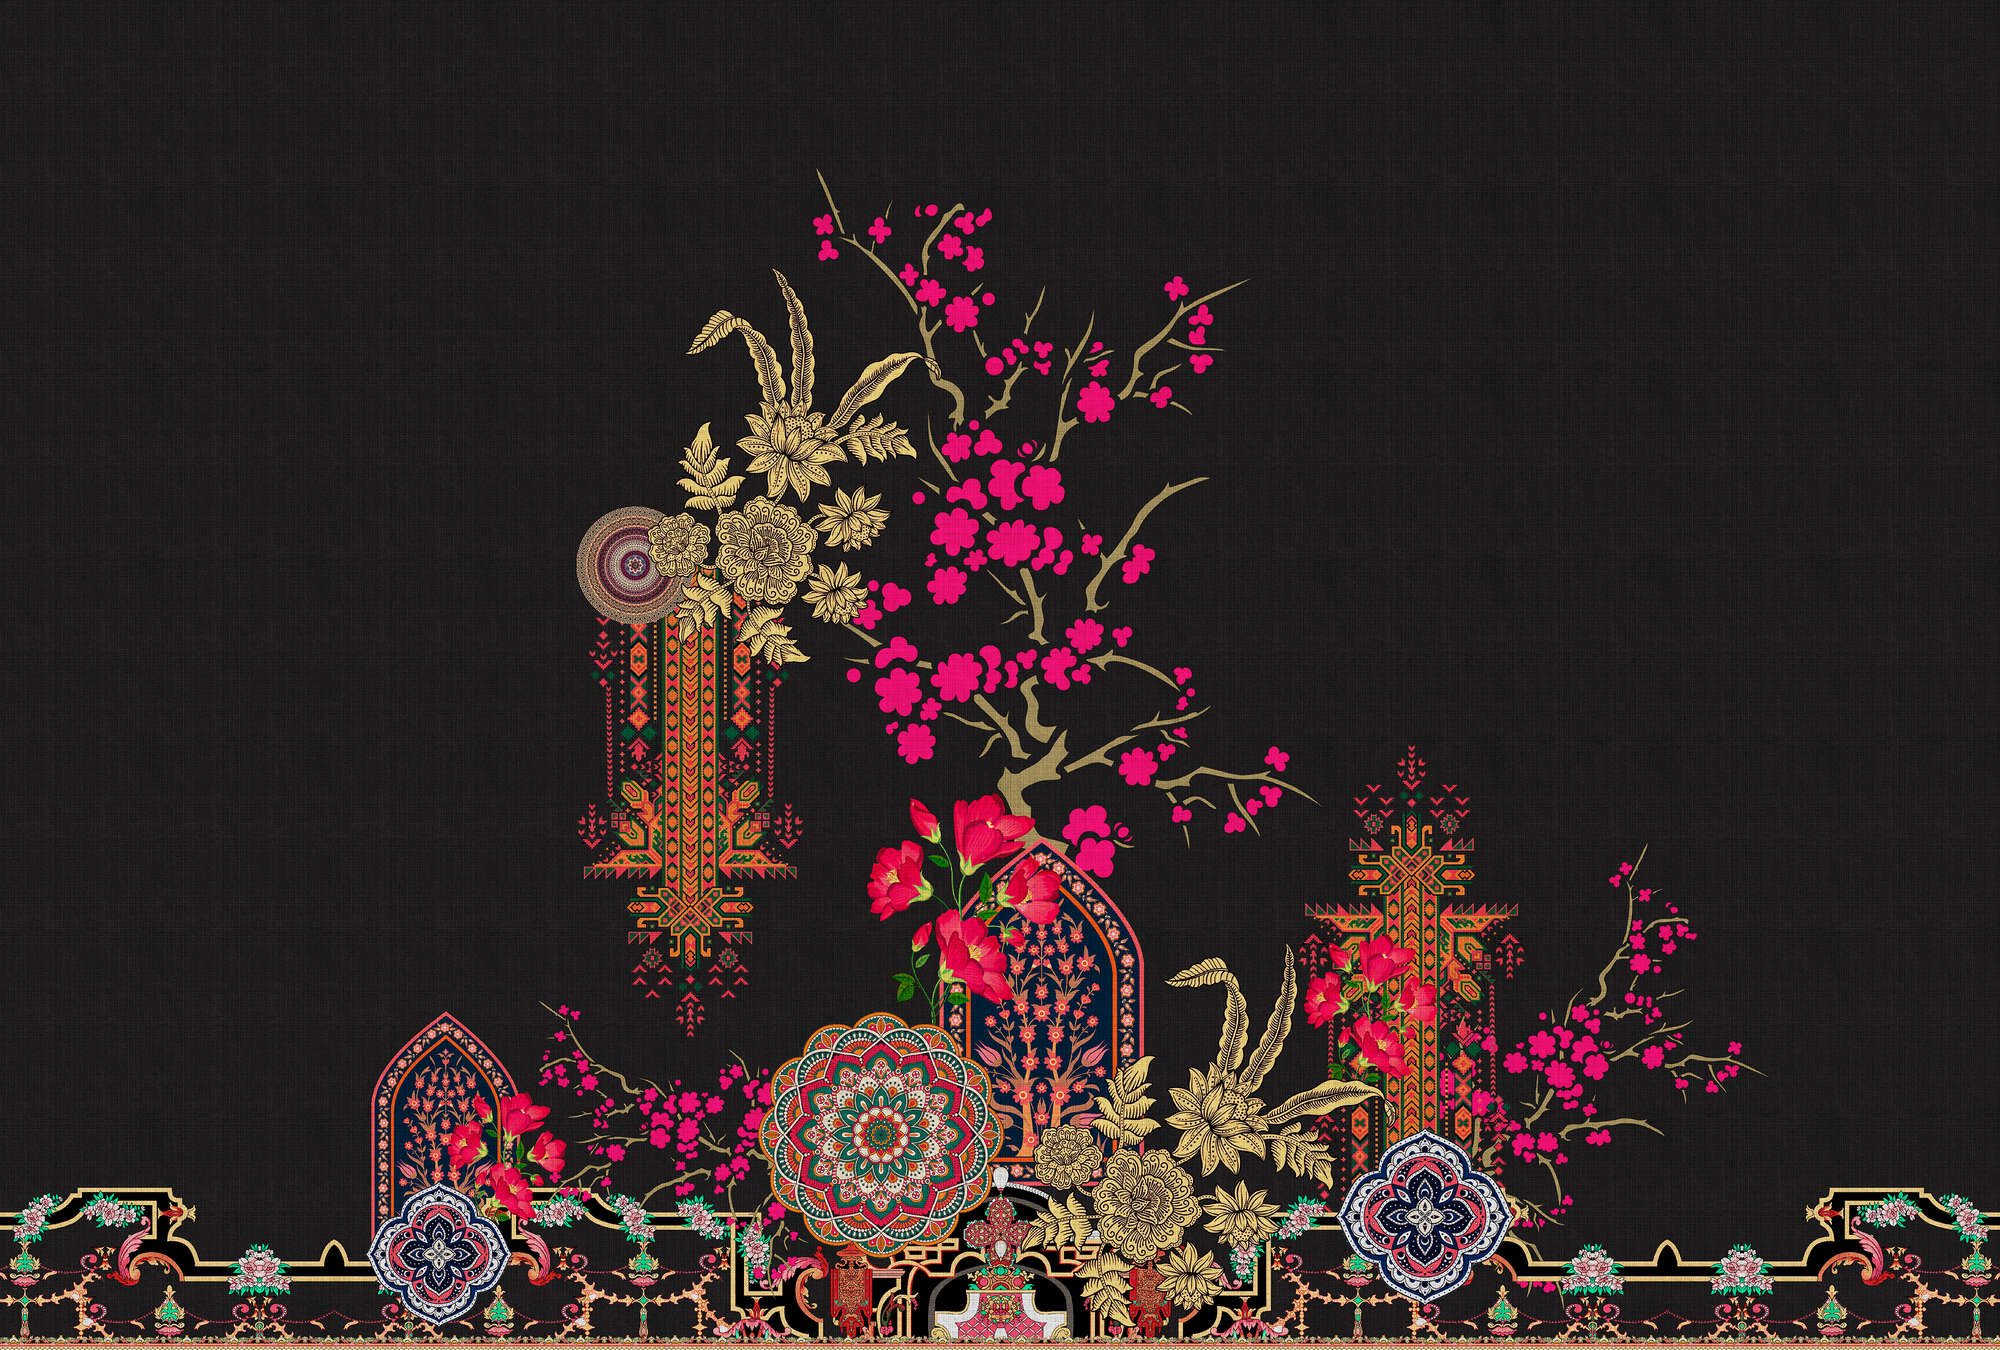             Oriental Garden 2 - Papier peint motifs tropicaux & fleurs
        